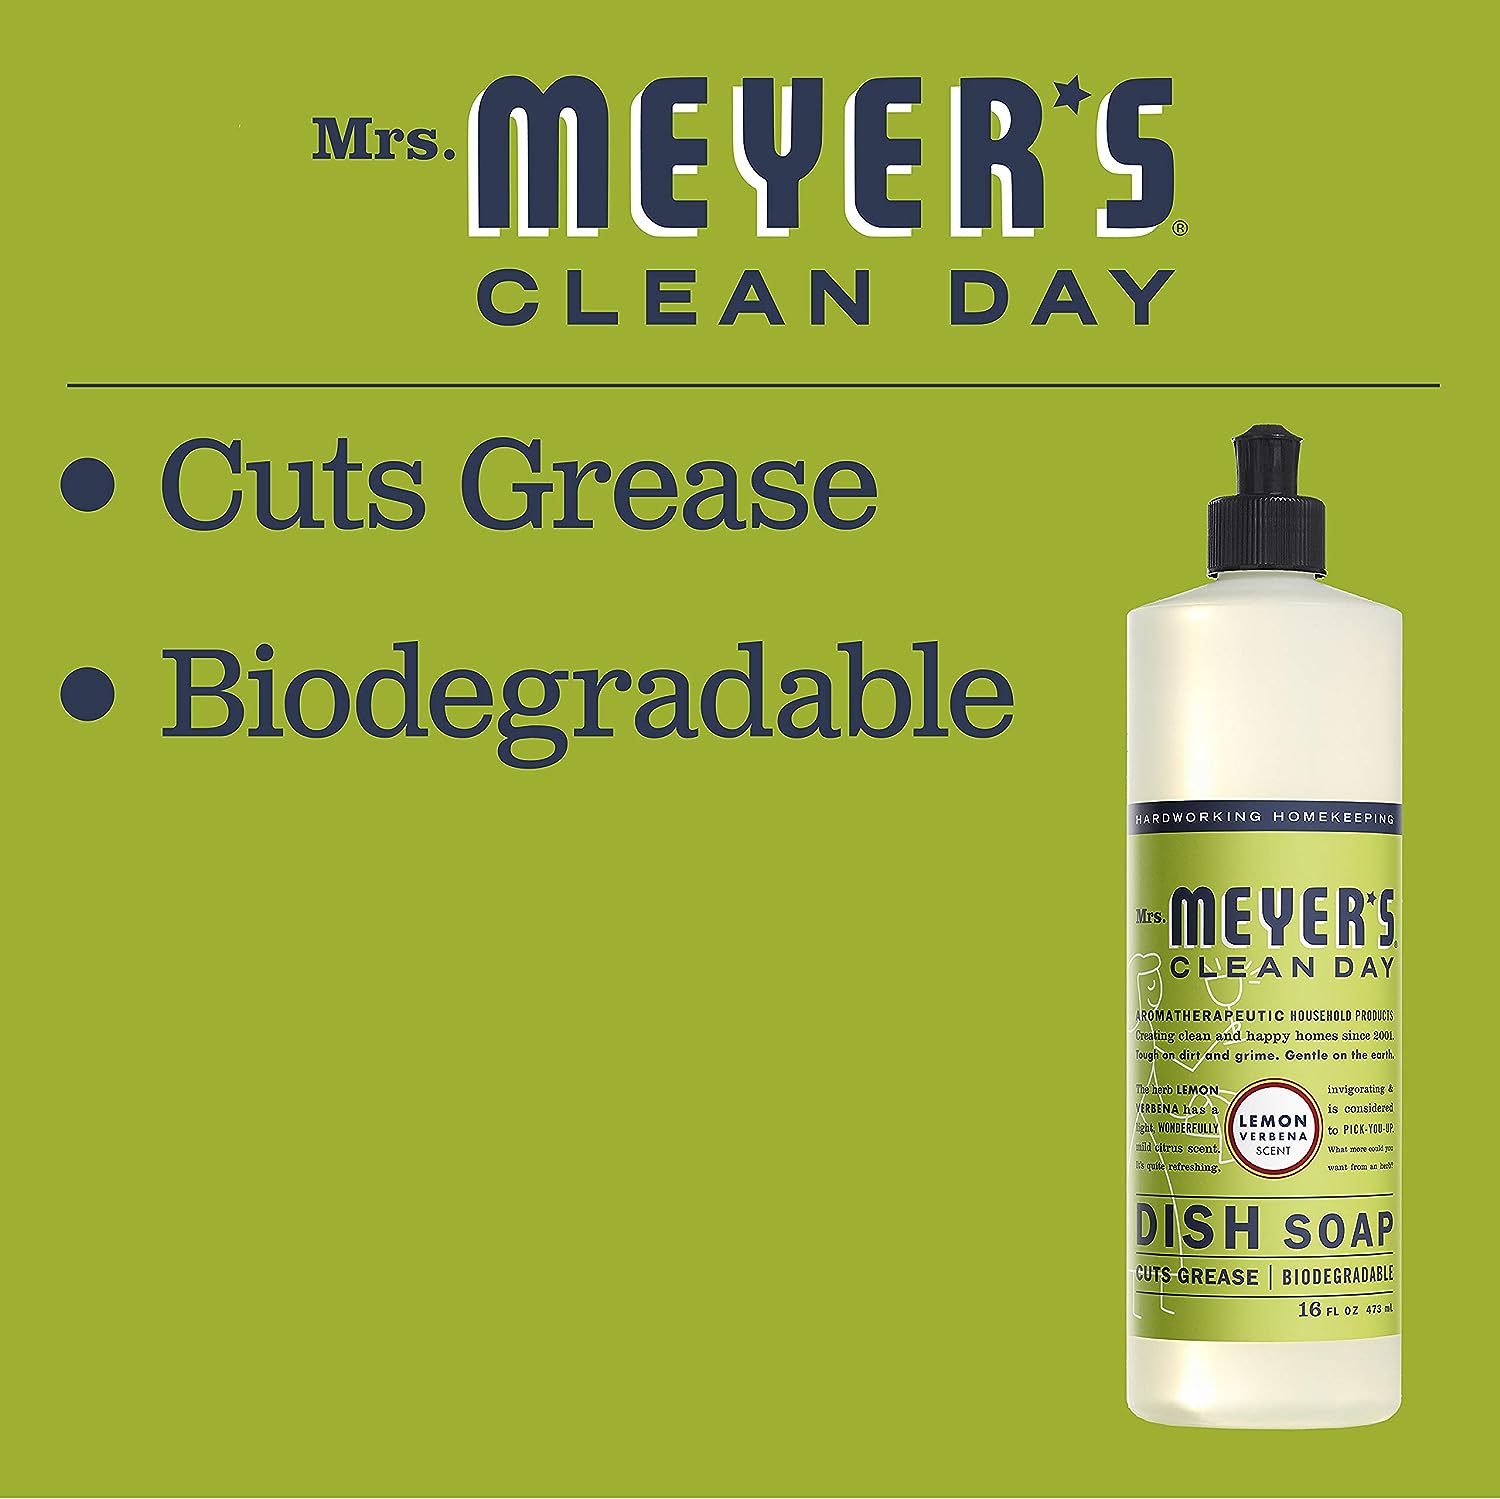 MRS. MEYER'S CLEAN DAY Liquid Dish Soap, Biodegradable Formula, Lemon Verbena, 16 fl. oz - Pack of 3 : Health & Household